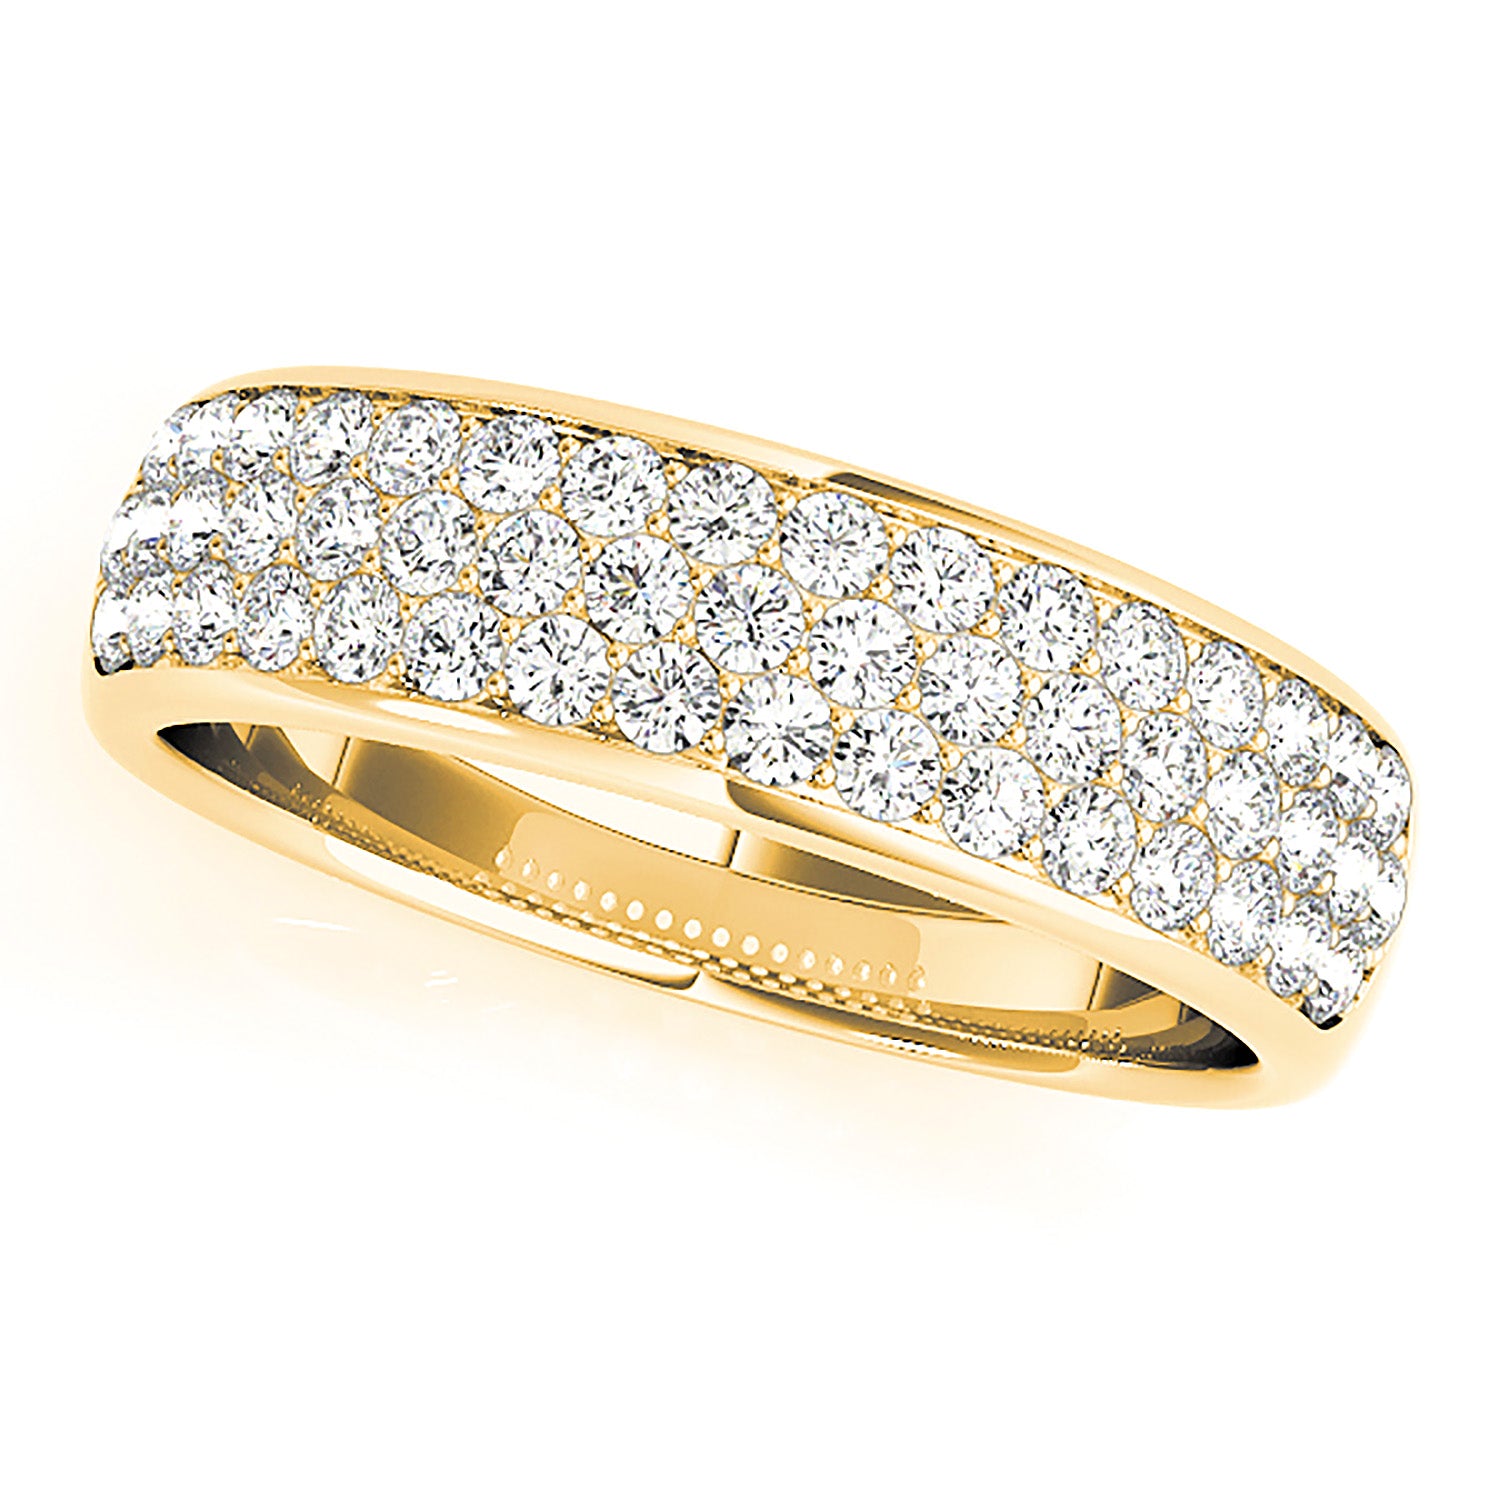 Triple Row Diamond Wedding Band - 14K/18k Solid White Gold / Platinum | Pave Set Diamond Anniversary Ring | Modern Design-in 14K/18K White, Yellow, Rose Gold and Platinum - Christmas Jewelry Gift -VIRABYANI